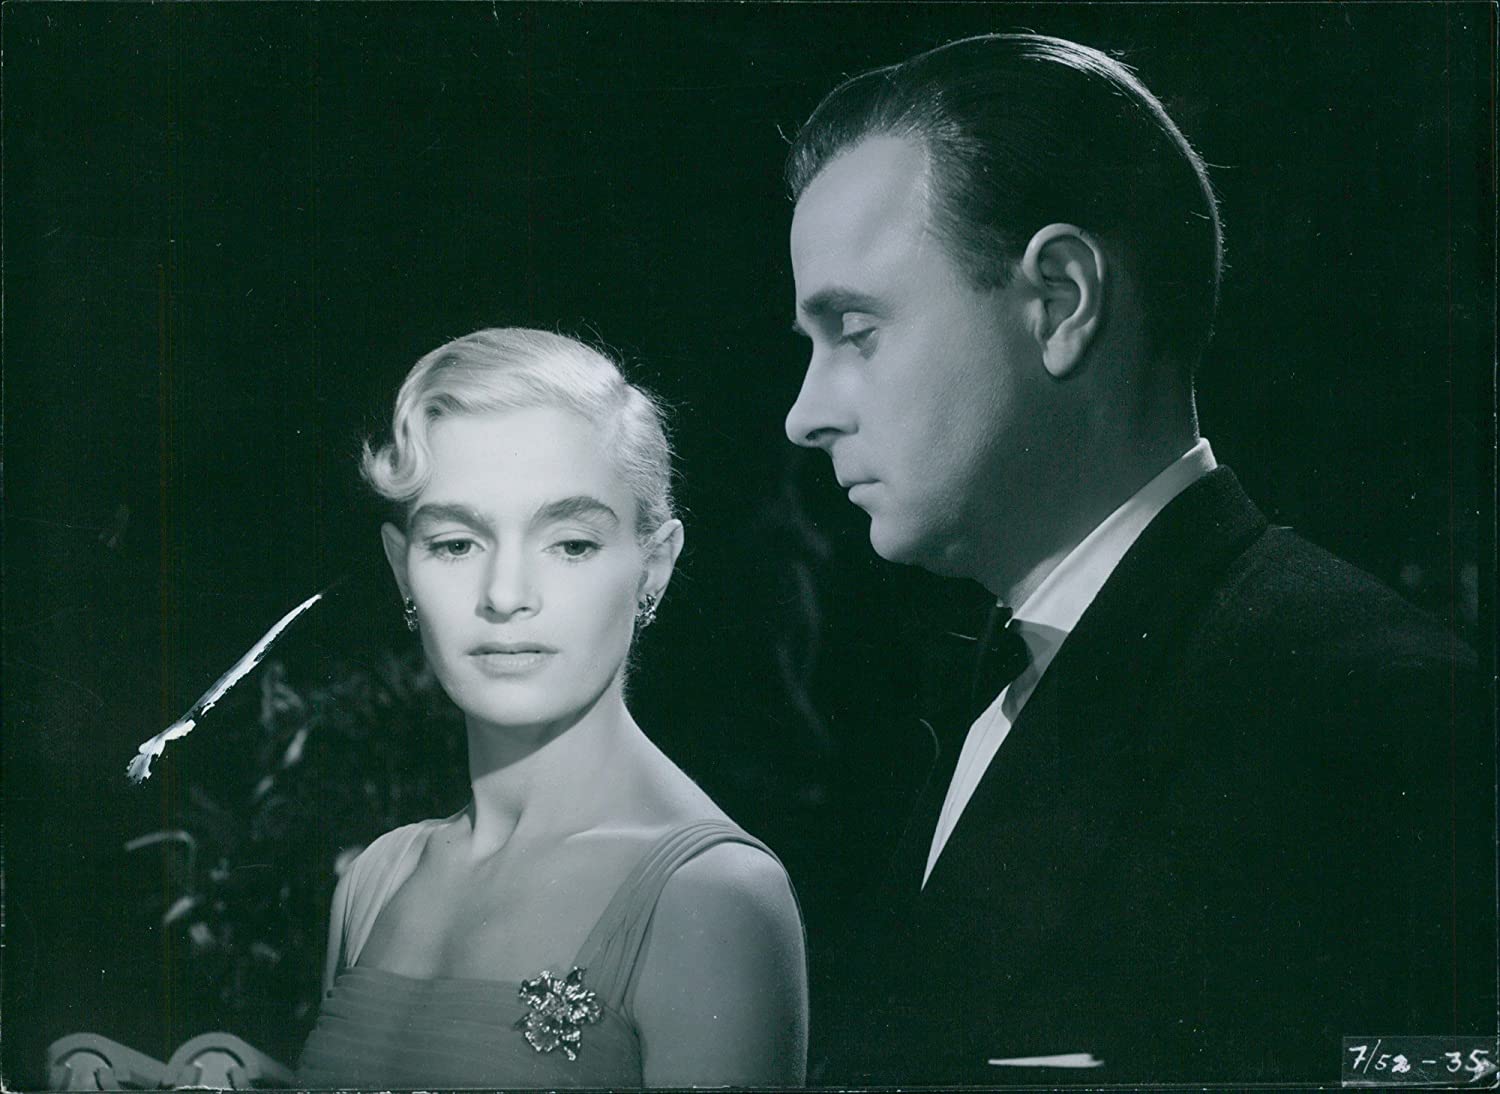 I dimma dold (1953) Screenshot 1 